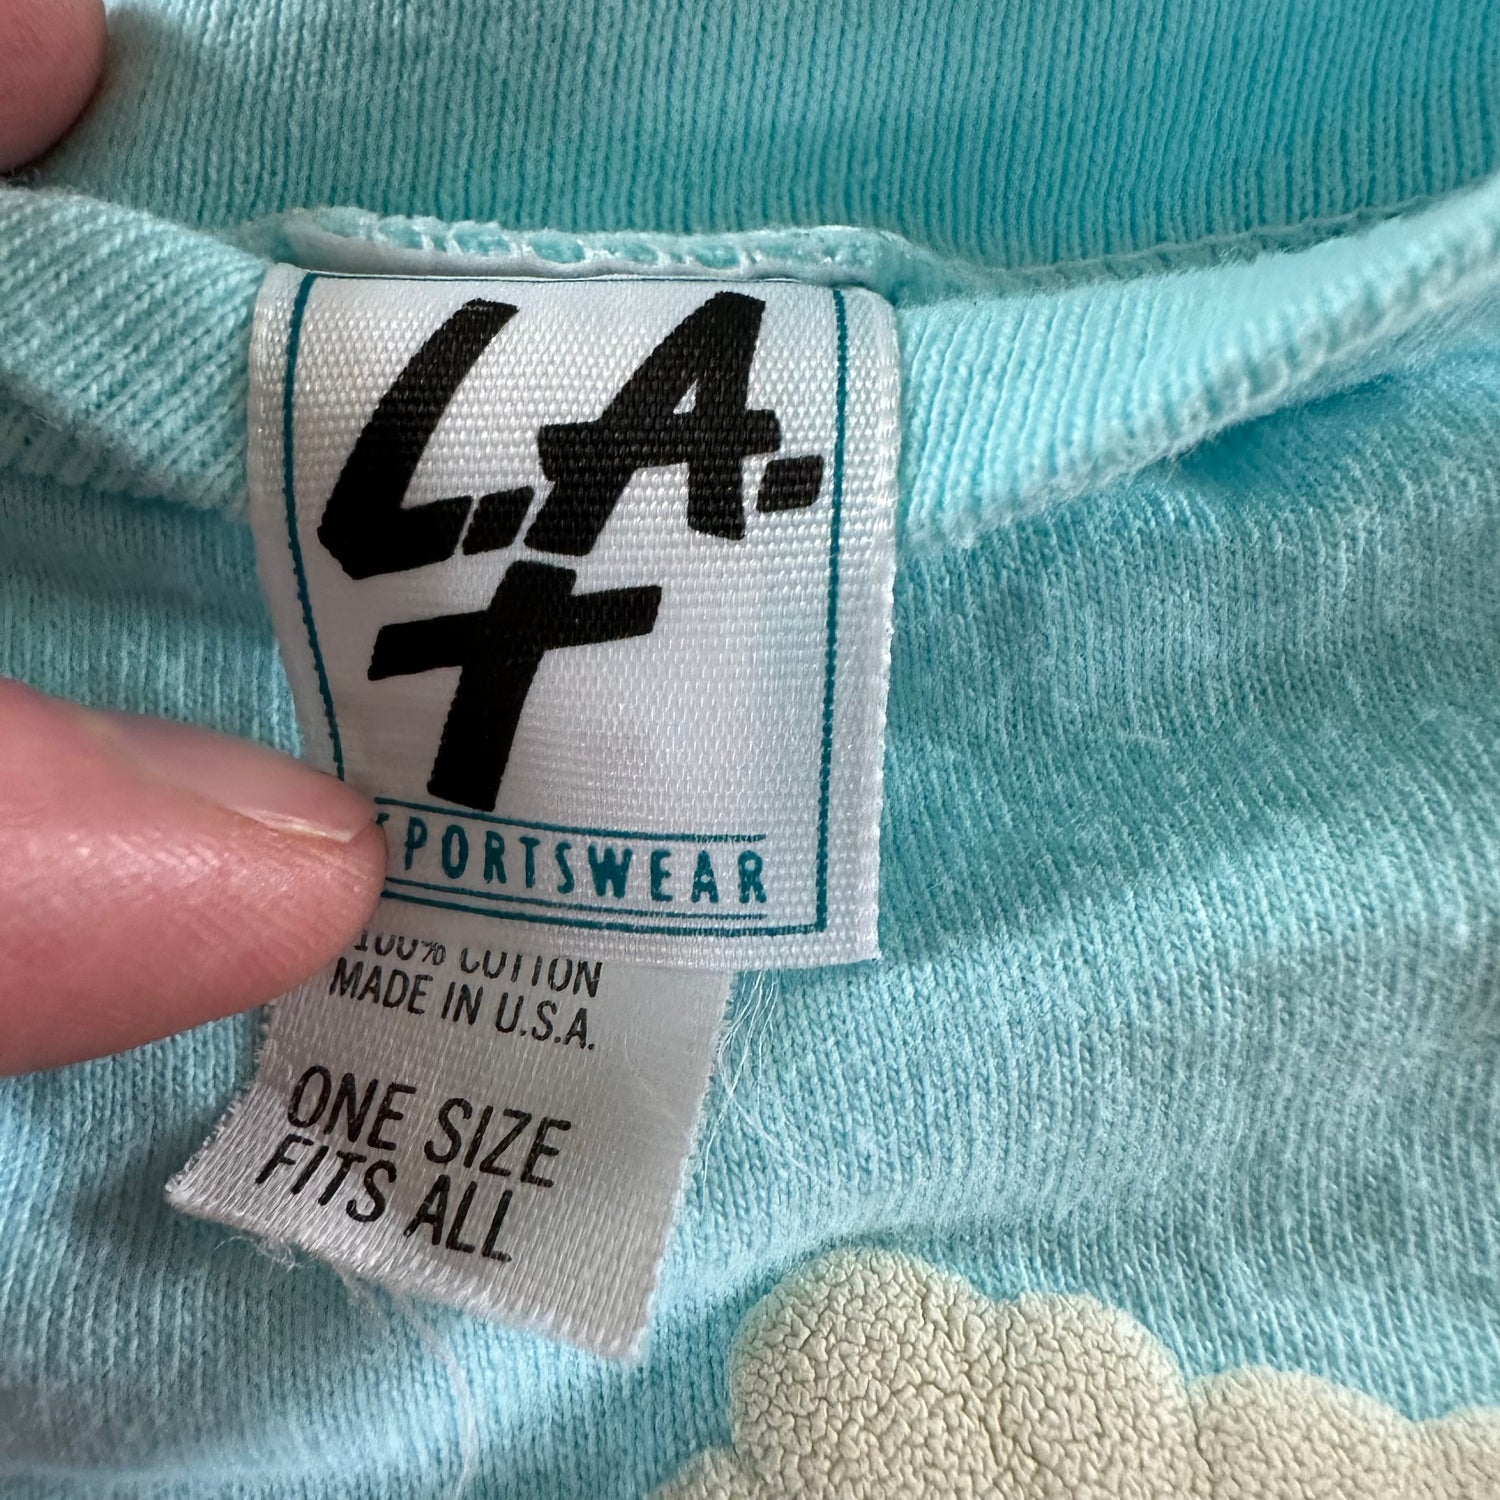 Vintage 1989 Cape May T-shirt size OSFA